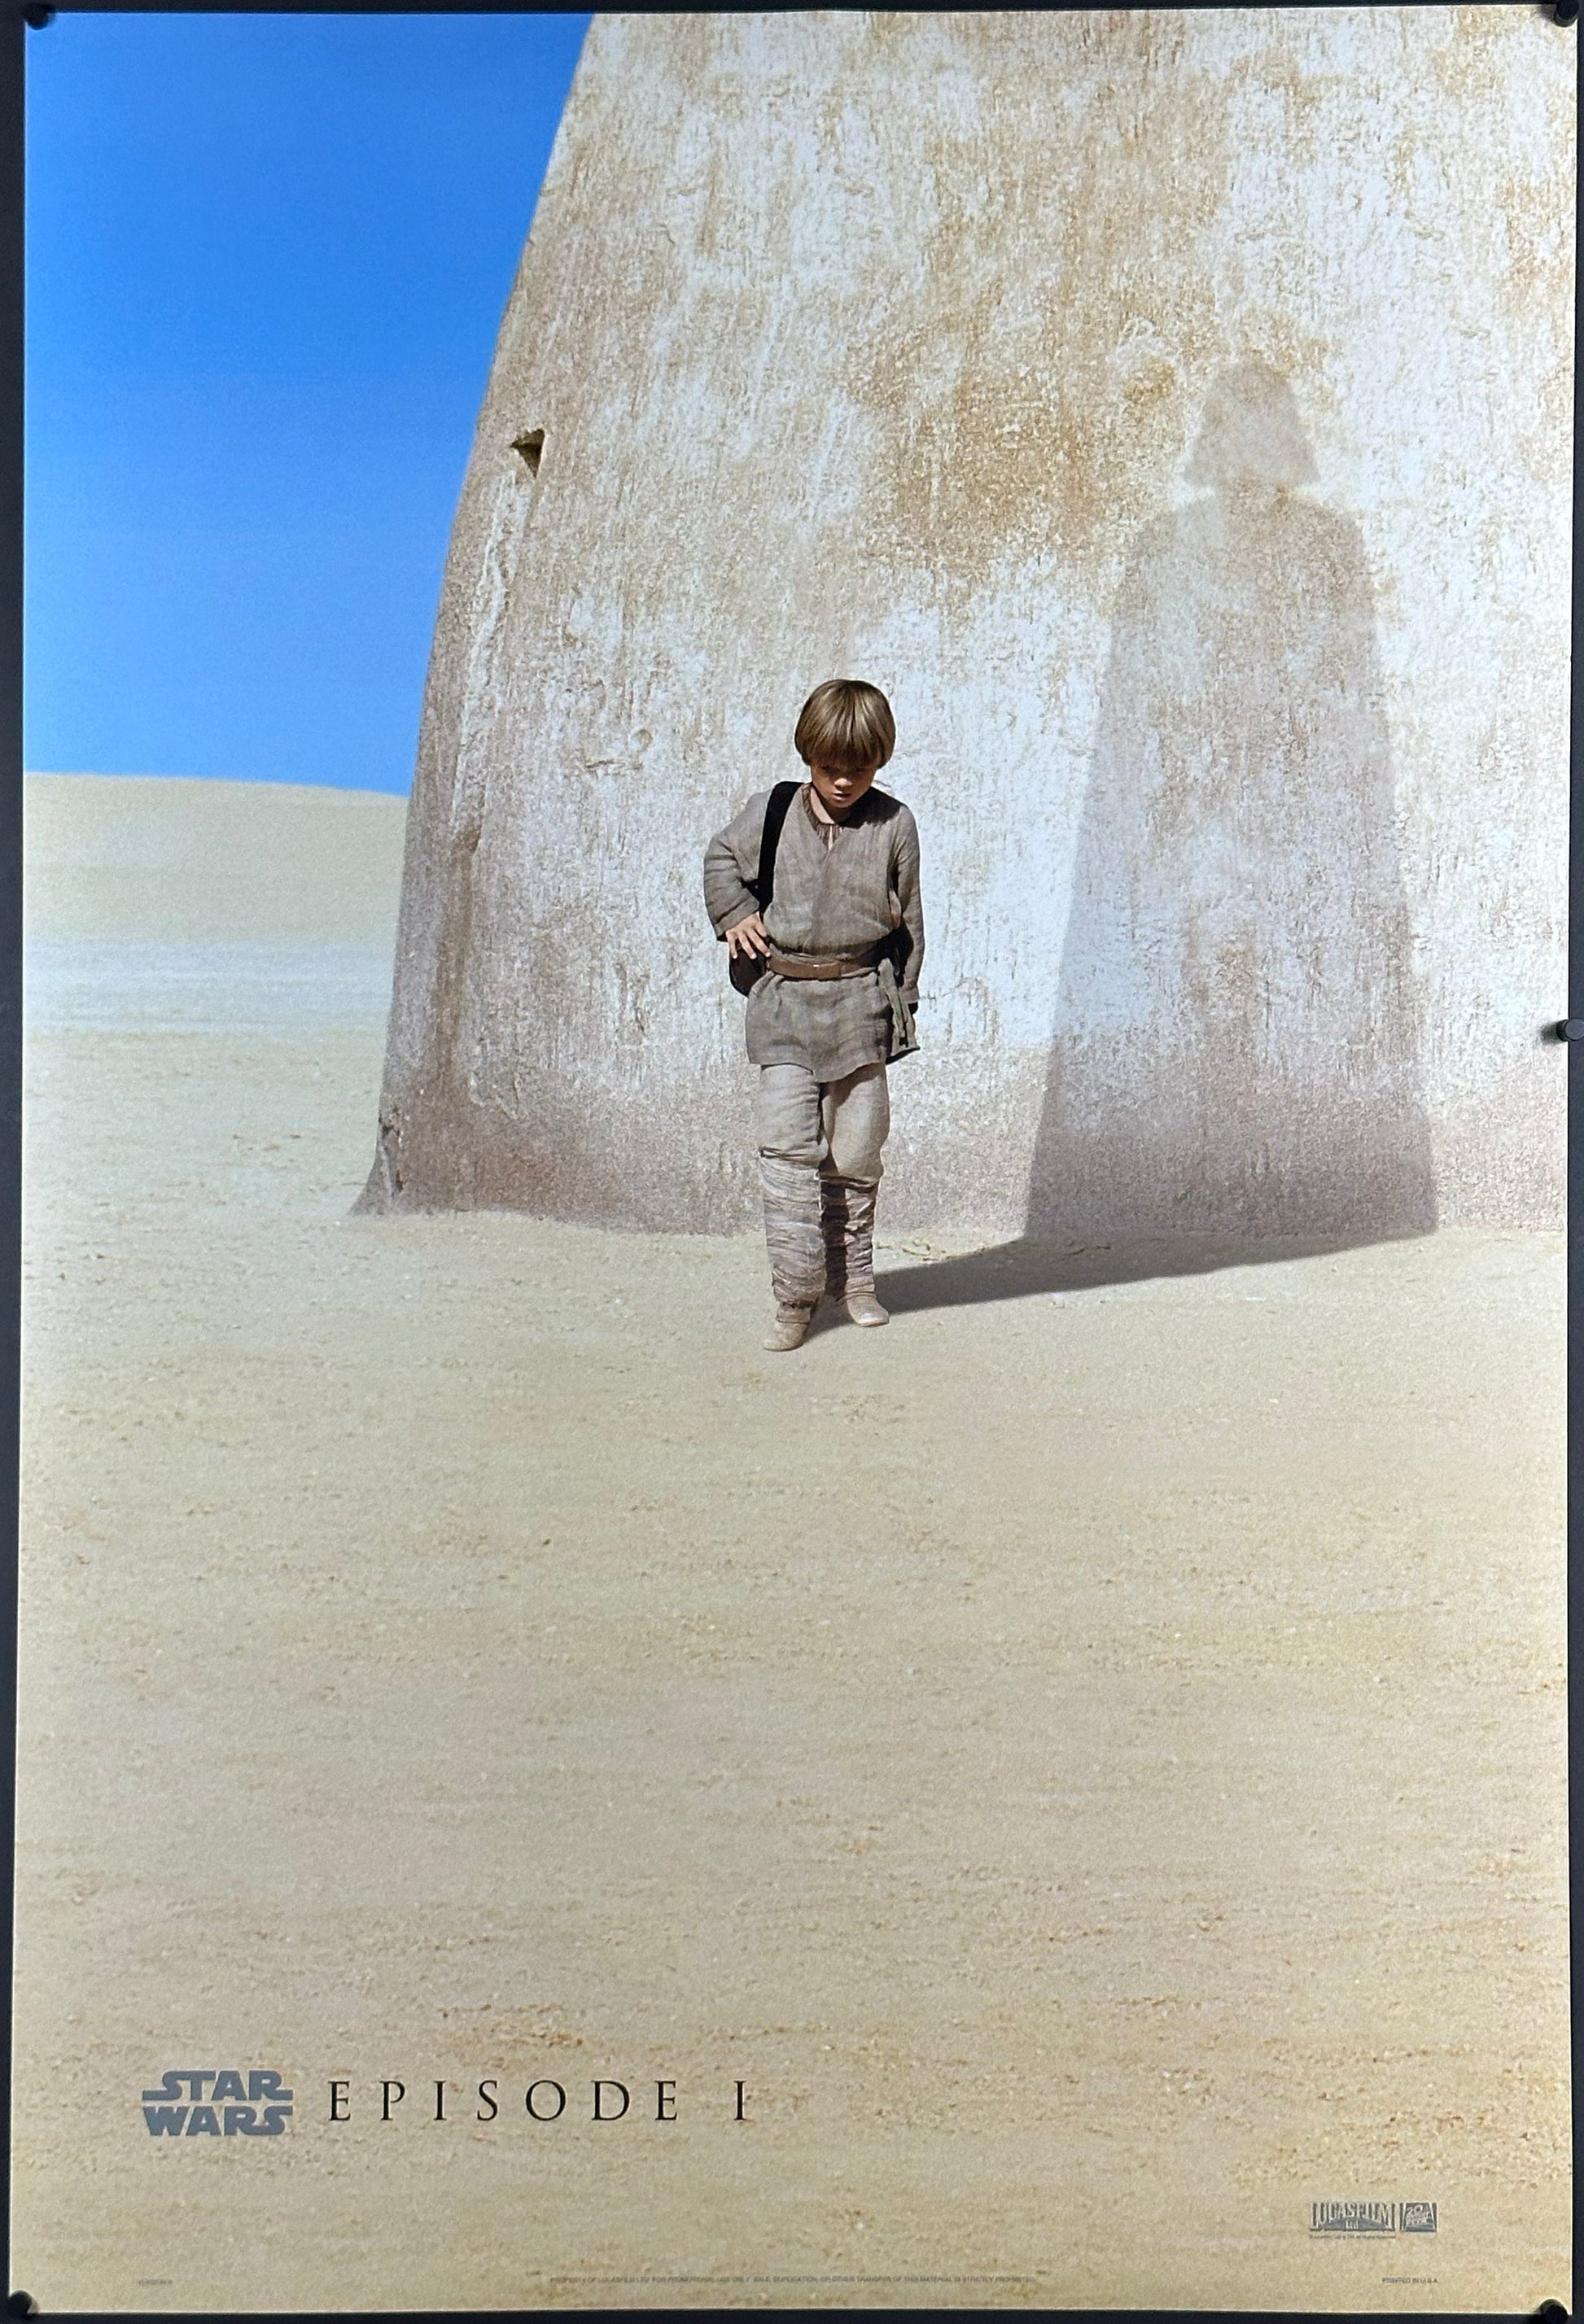 Star Wars: Episode I - The Phantom Menace US One Sheet Teaser Style (1999) - ORIGINAL RELEASE - posterpalace.com